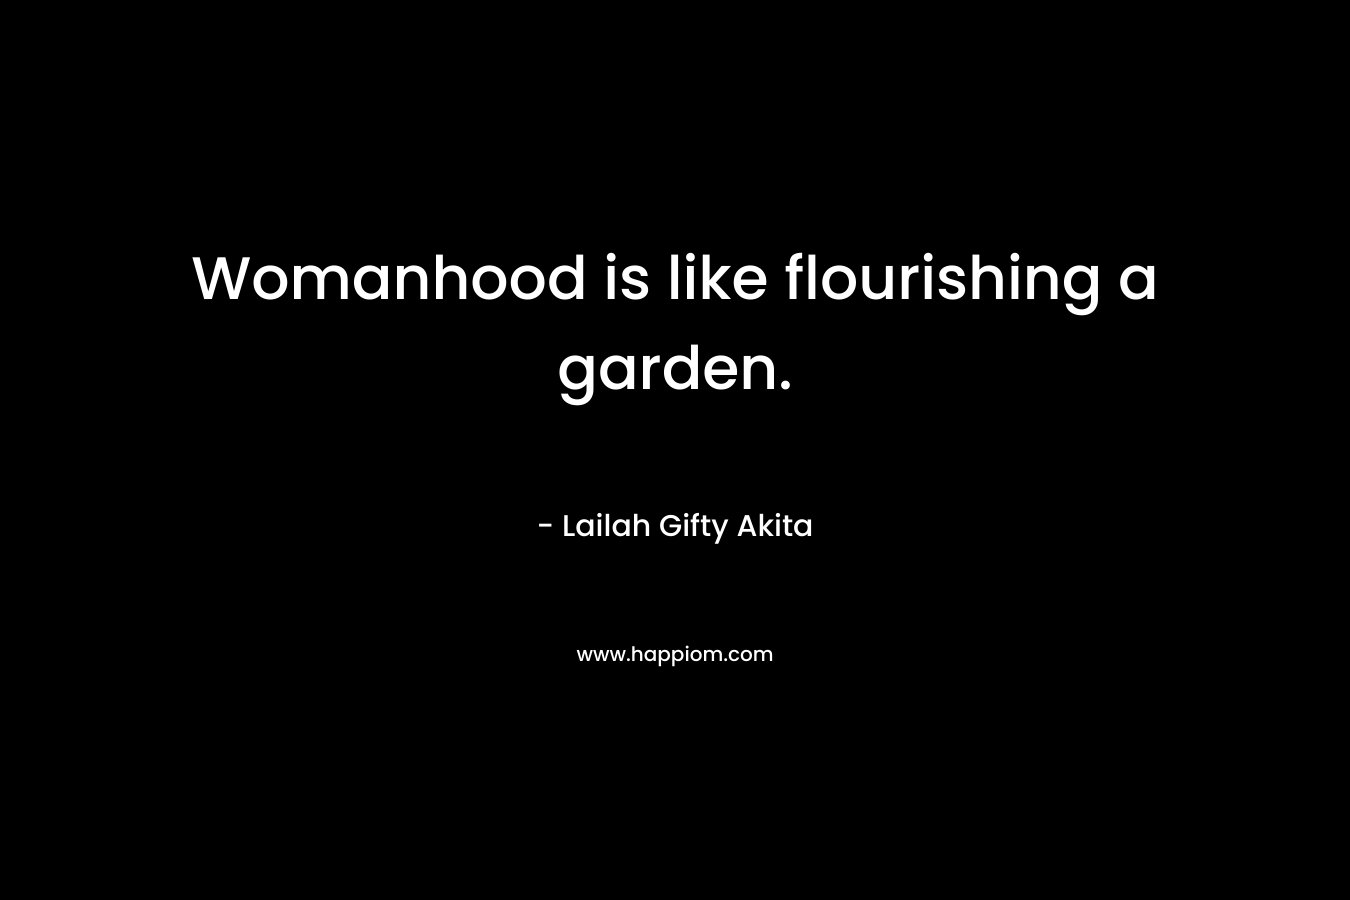 Womanhood is like flourishing a garden. – Lailah Gifty Akita